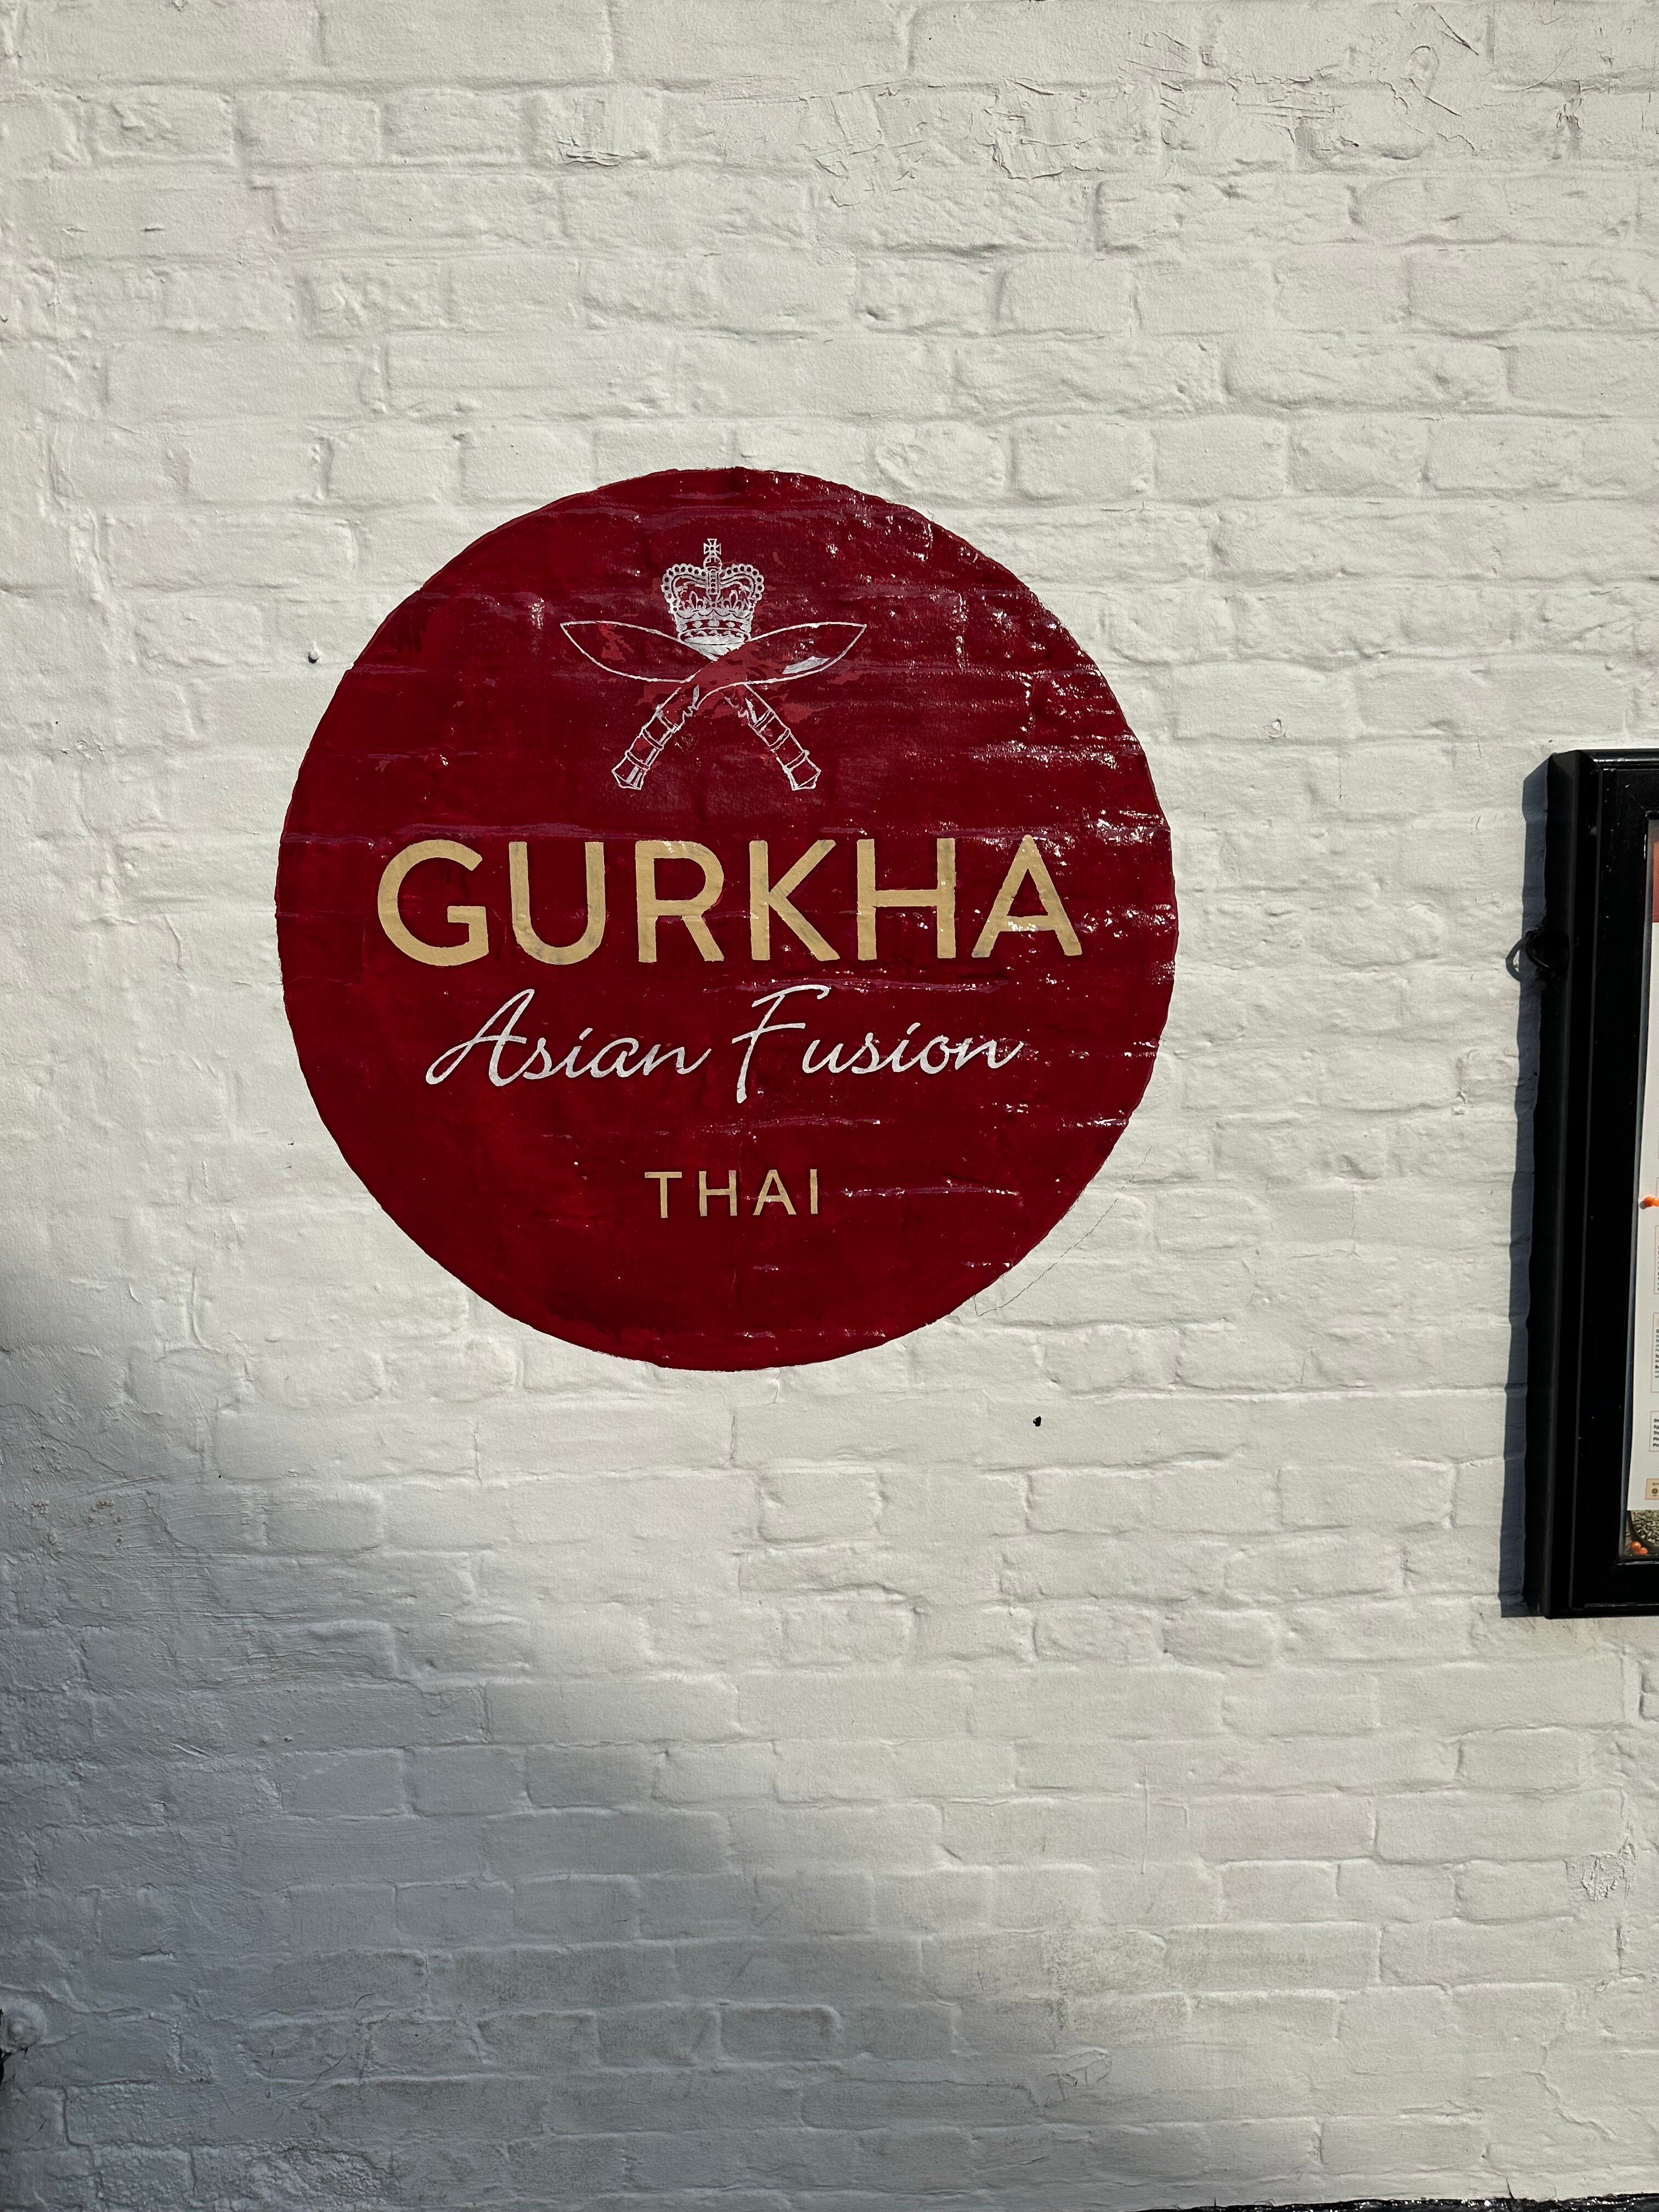 Gurkha Nepalese and Indian cuisine